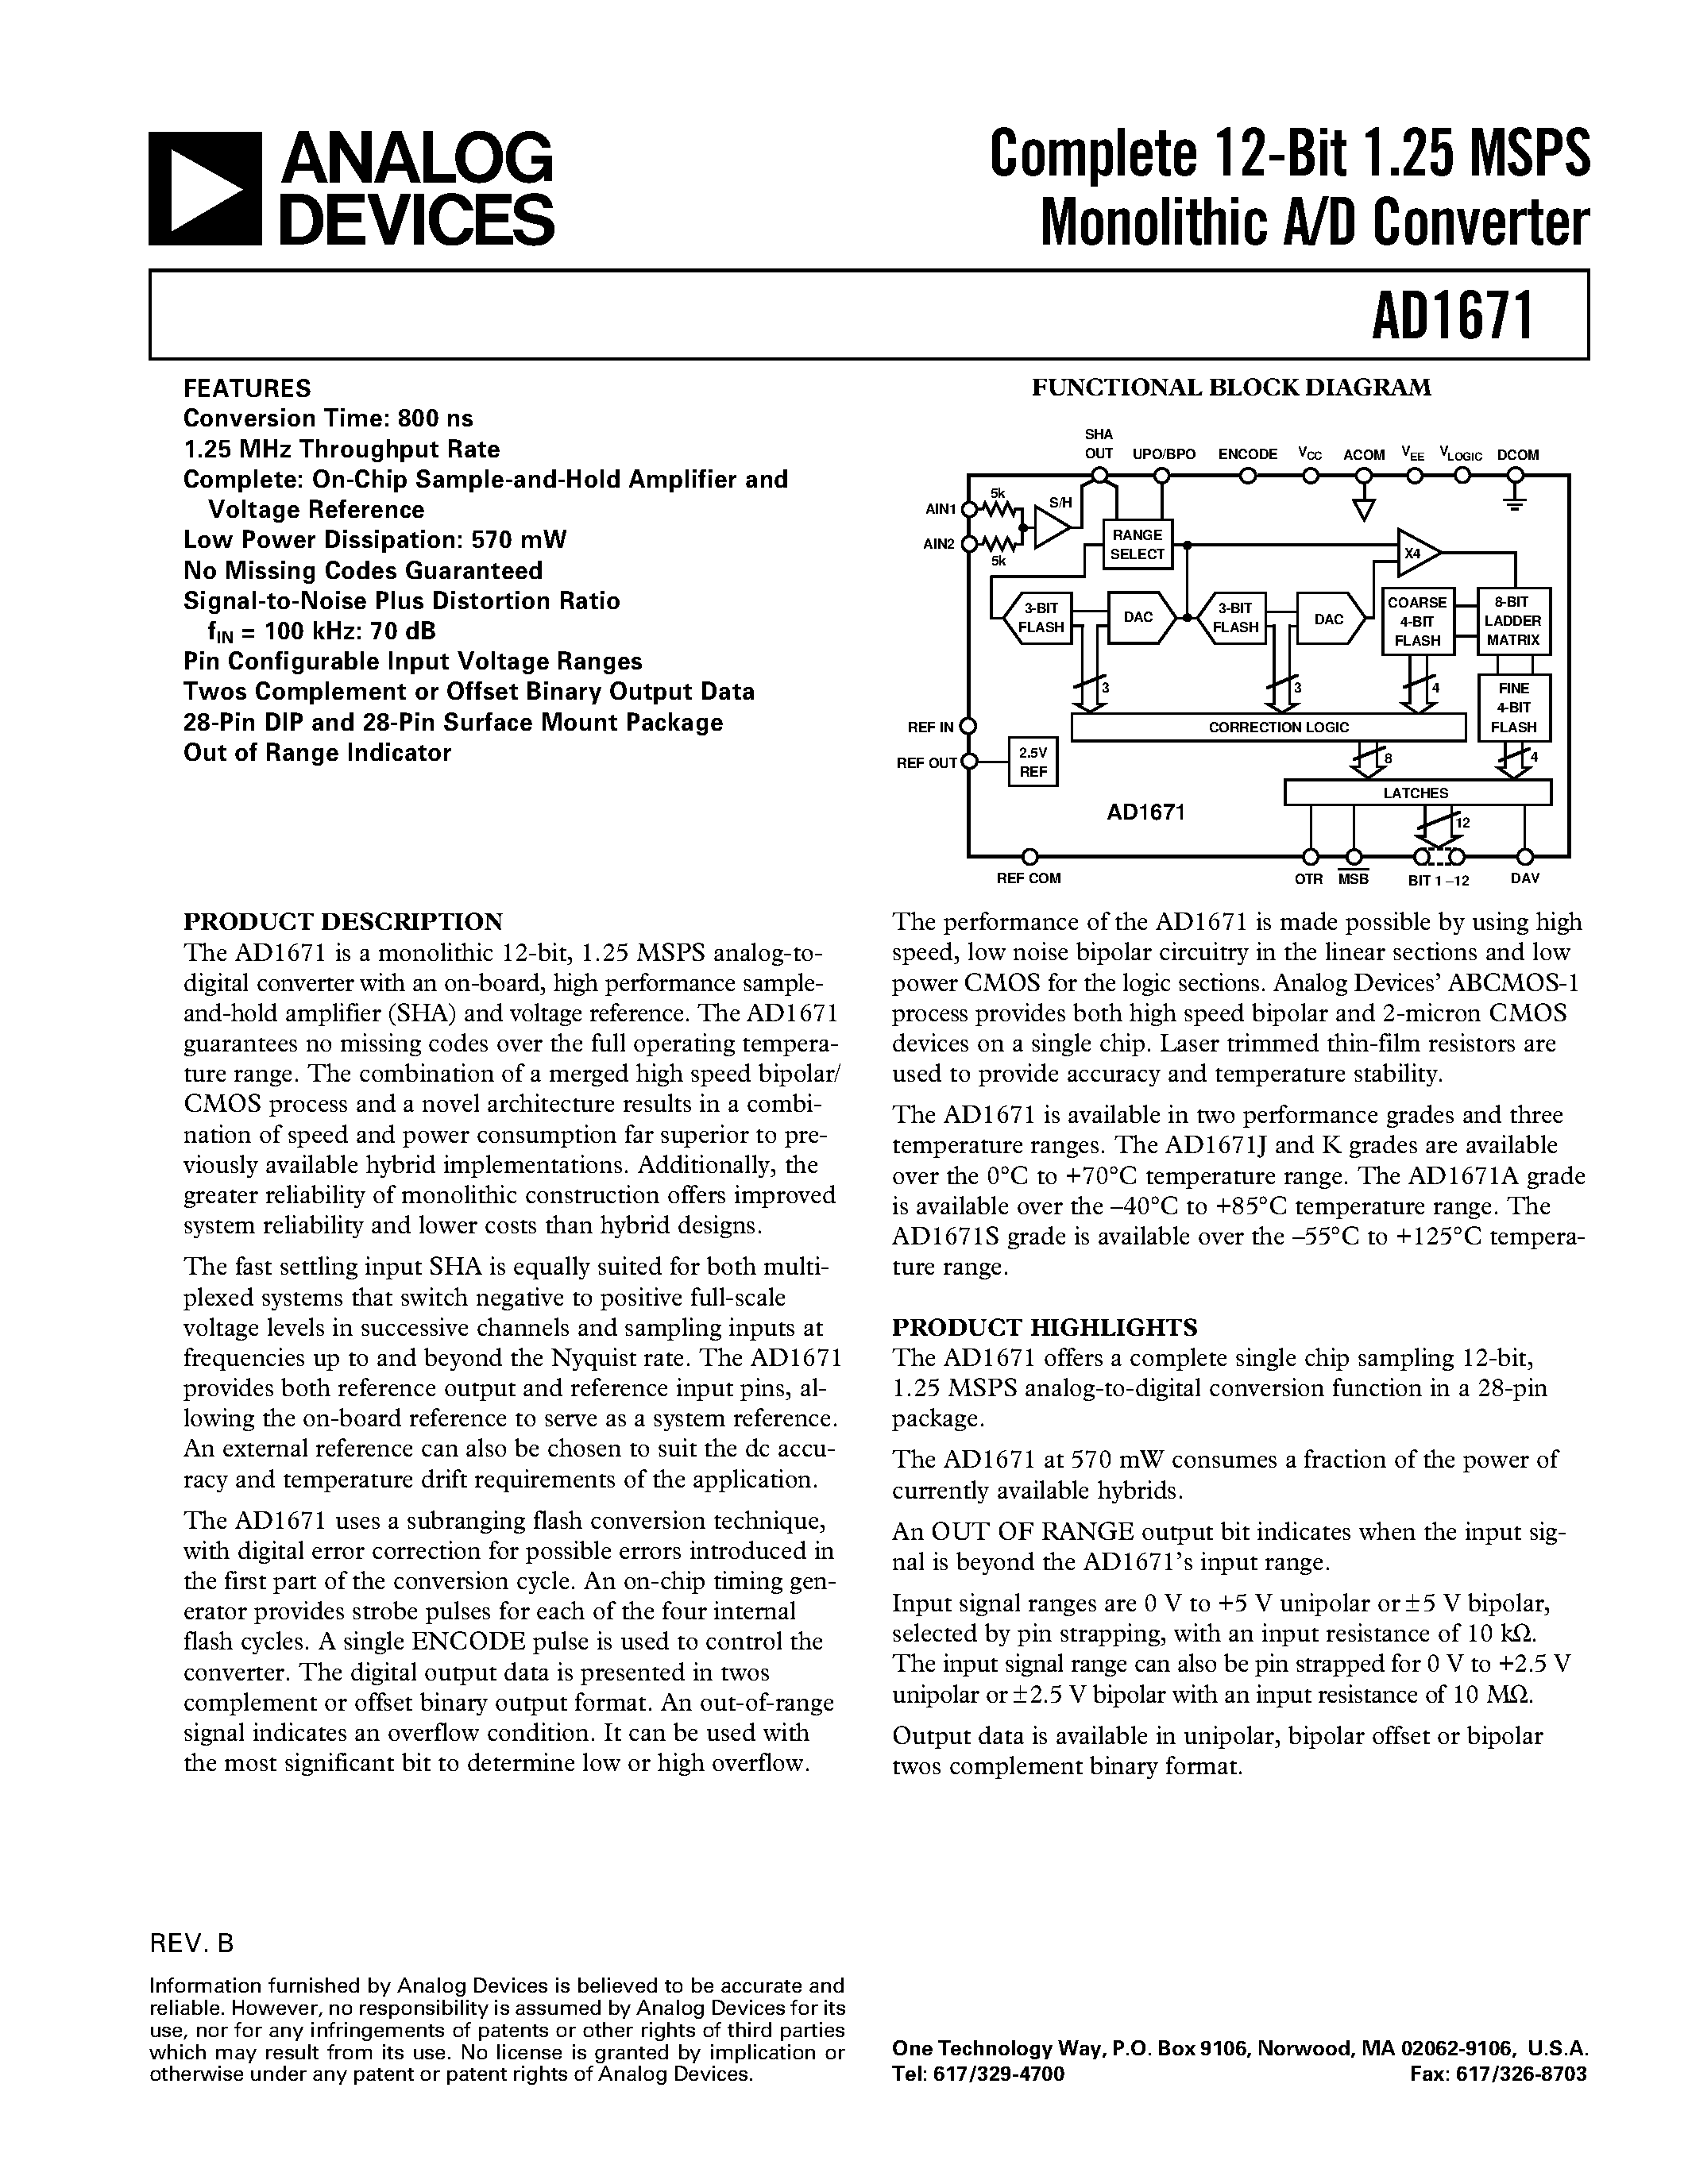 Datasheet AD1671K - Complete 12-Bit 1.25 MSPS Monolithic A/D Converter page 1